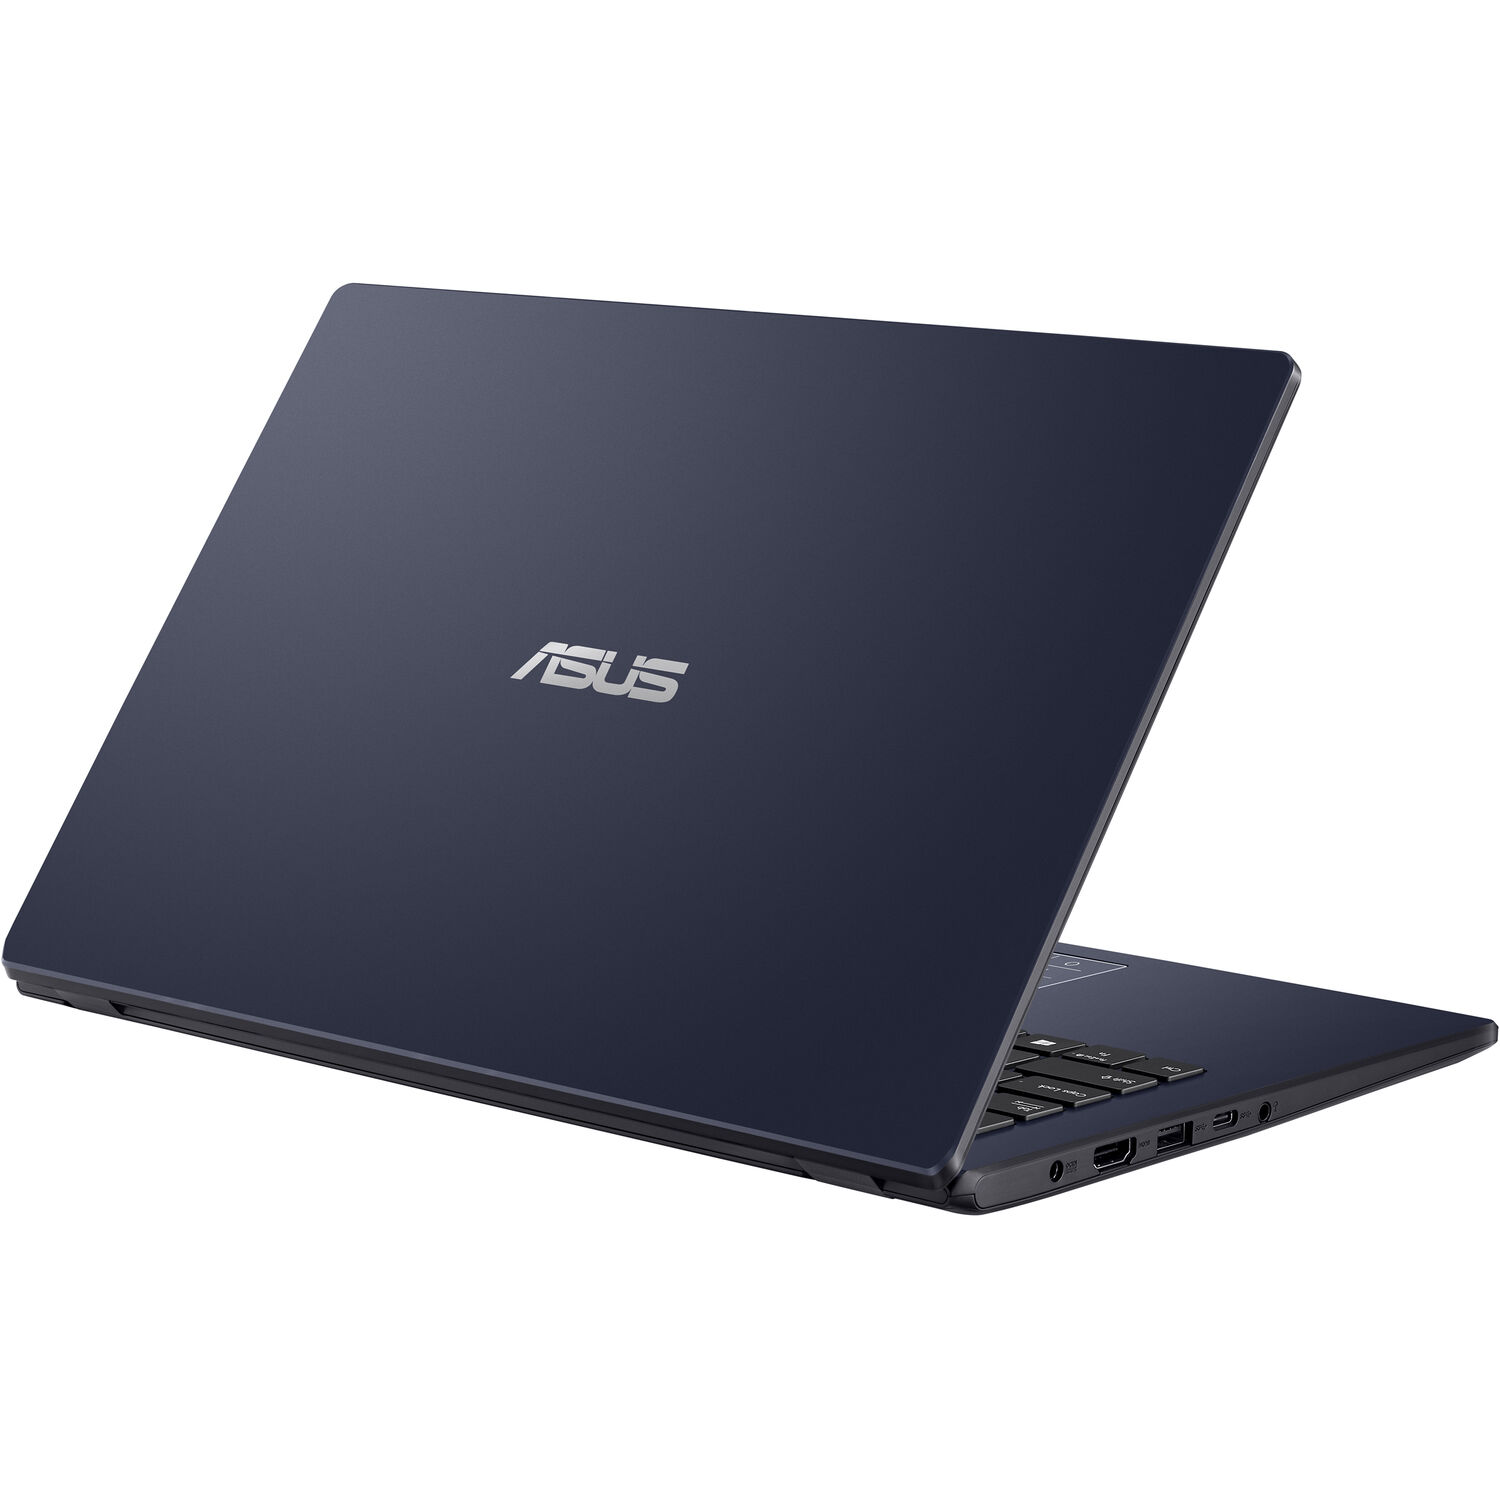 ASUS 14 L410 Everyday Value Laptop (Intel Celeron N4020 2-Core, 4GB RAM, 256GB PCIe SSD, 14.0" Full HD (1920x1080), Intel UHD 600, Wifi, Bluetooth, Webcam, 1xUSB 3.2, 1xHDMI, Win 10 Home) - image 5 of 6